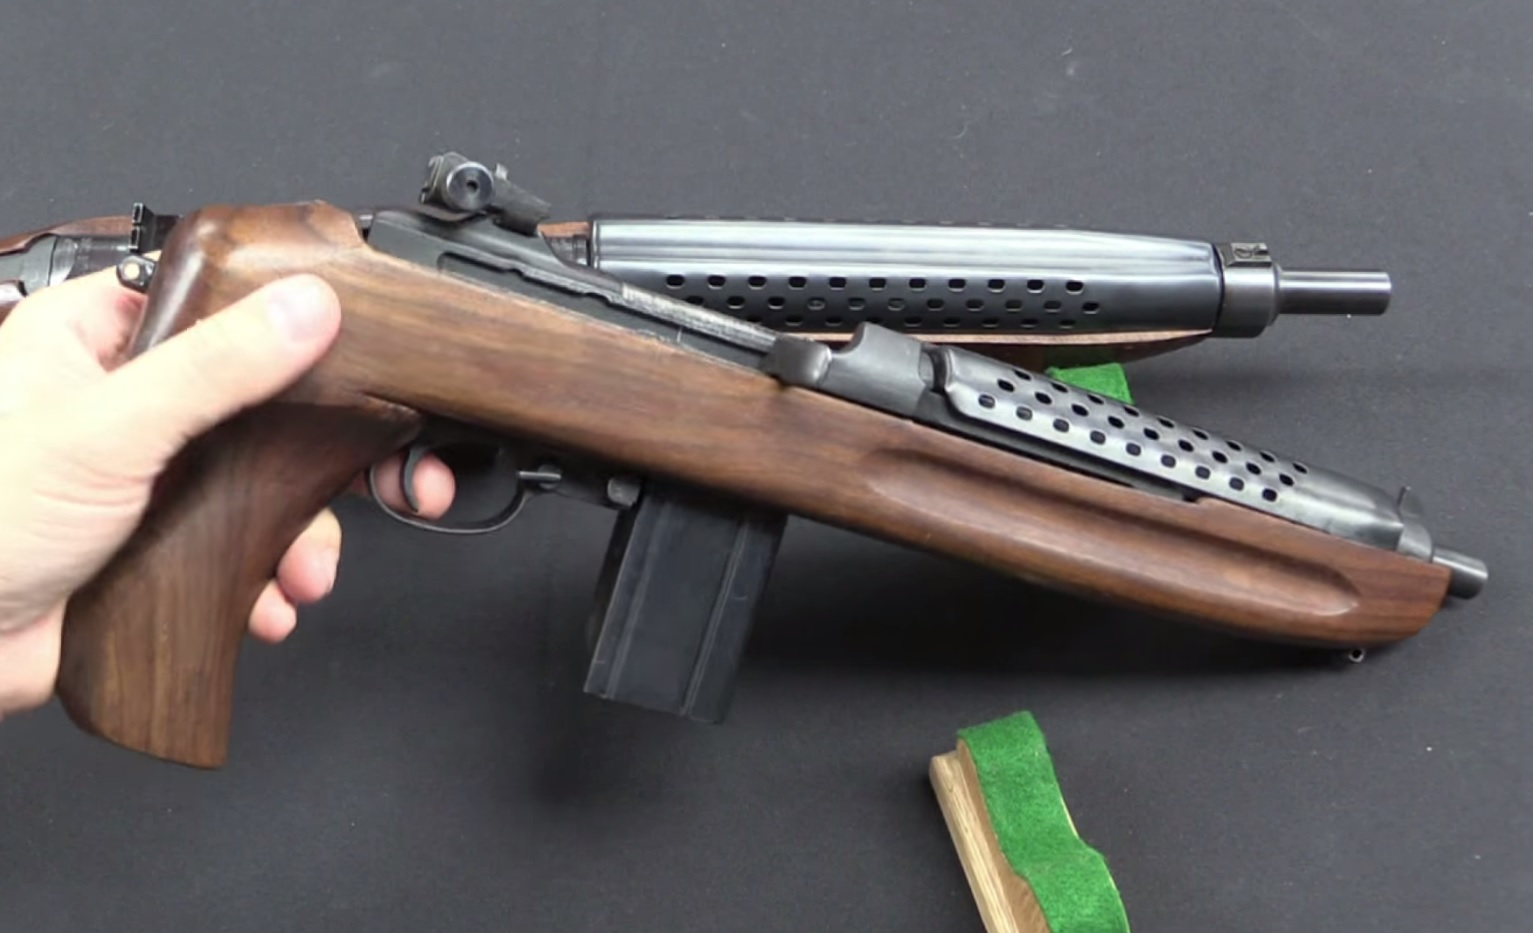 Video: Pistol Versions of the M1 Carbine OutdoorHub.